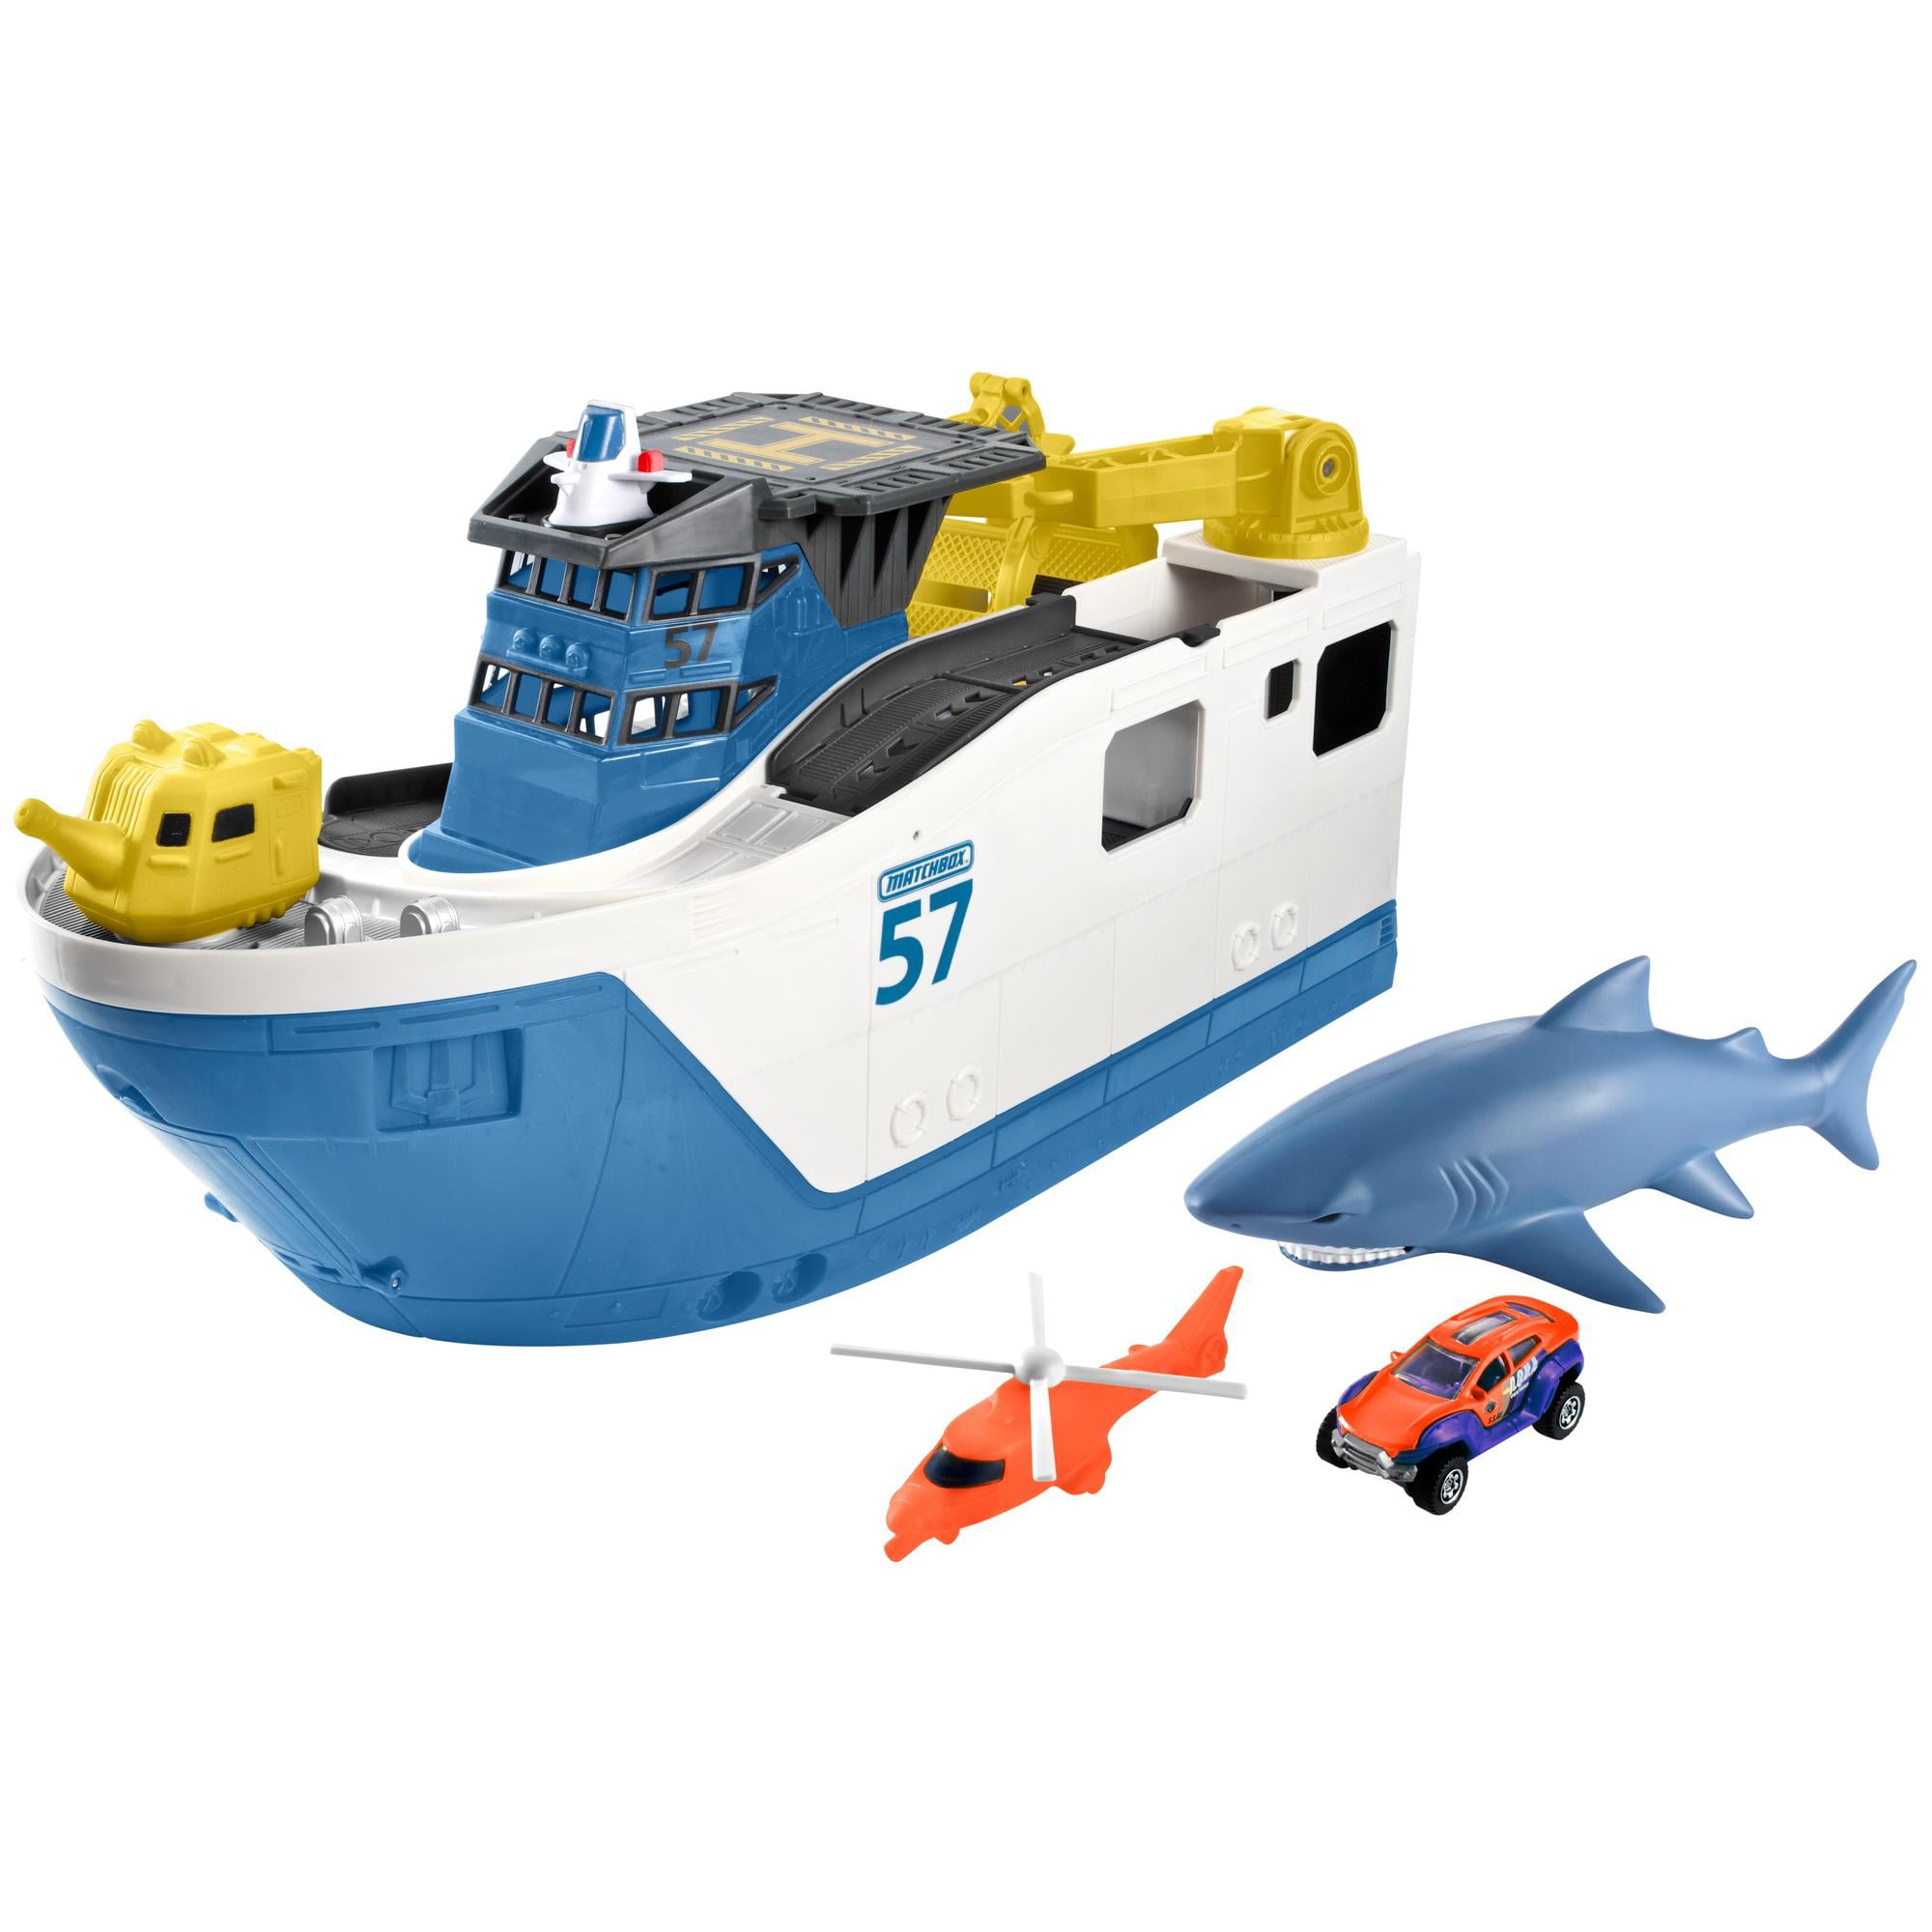 matchbox toy boat